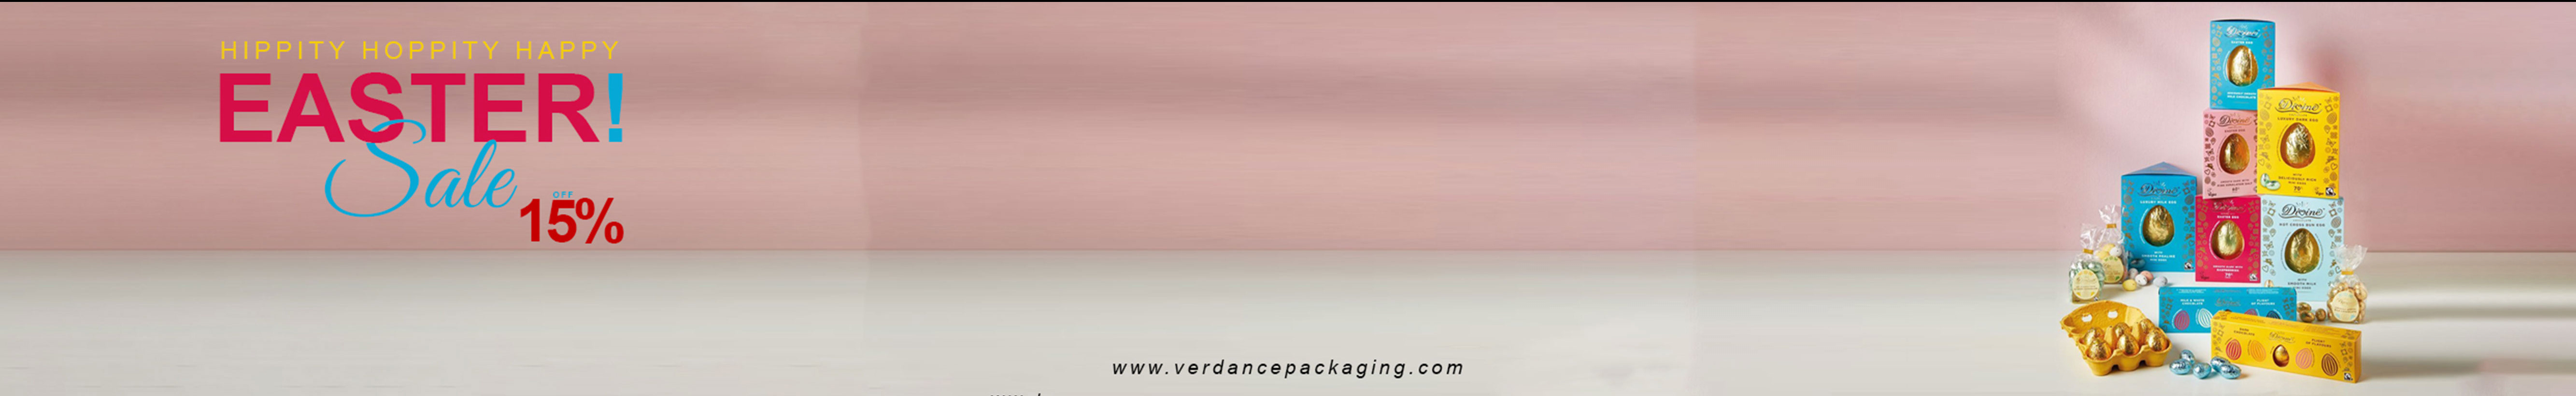 Verdance Packaging's profile banner